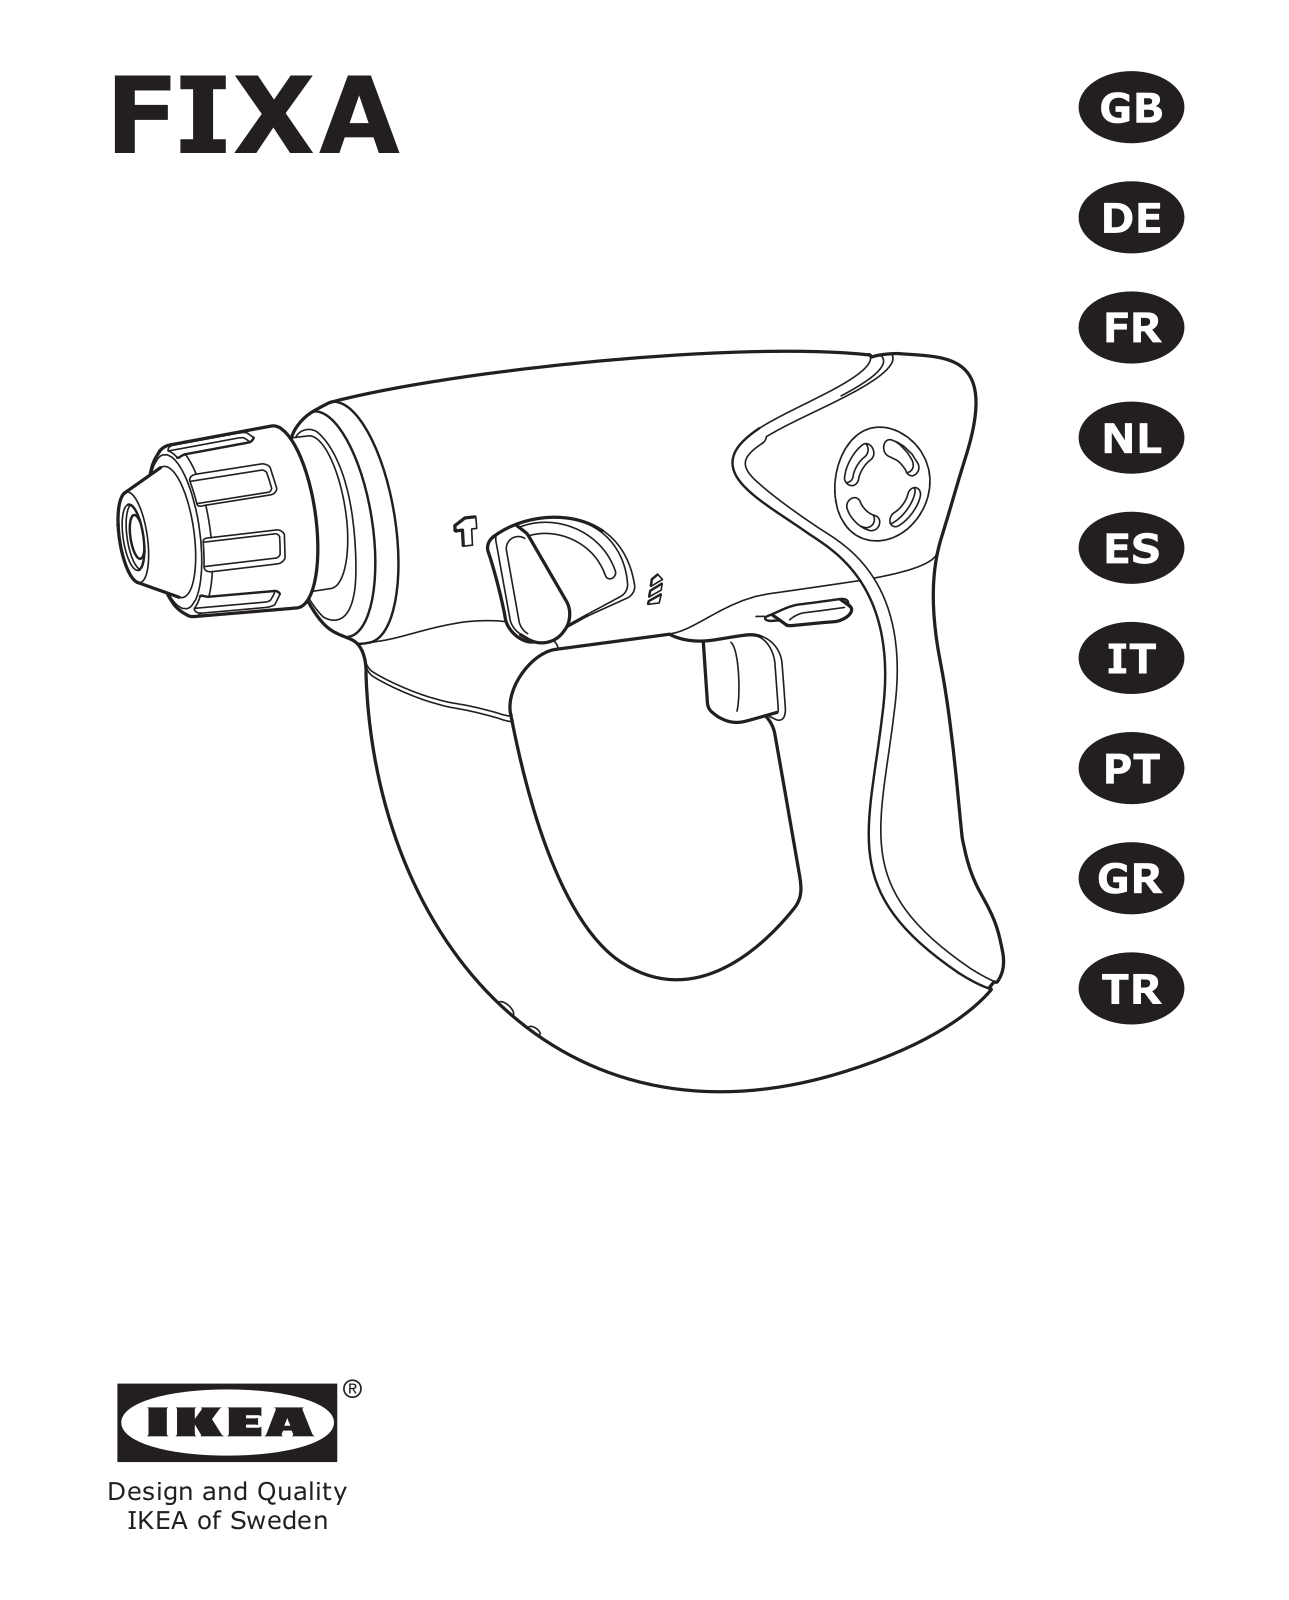 IKEA FIXA User Manual